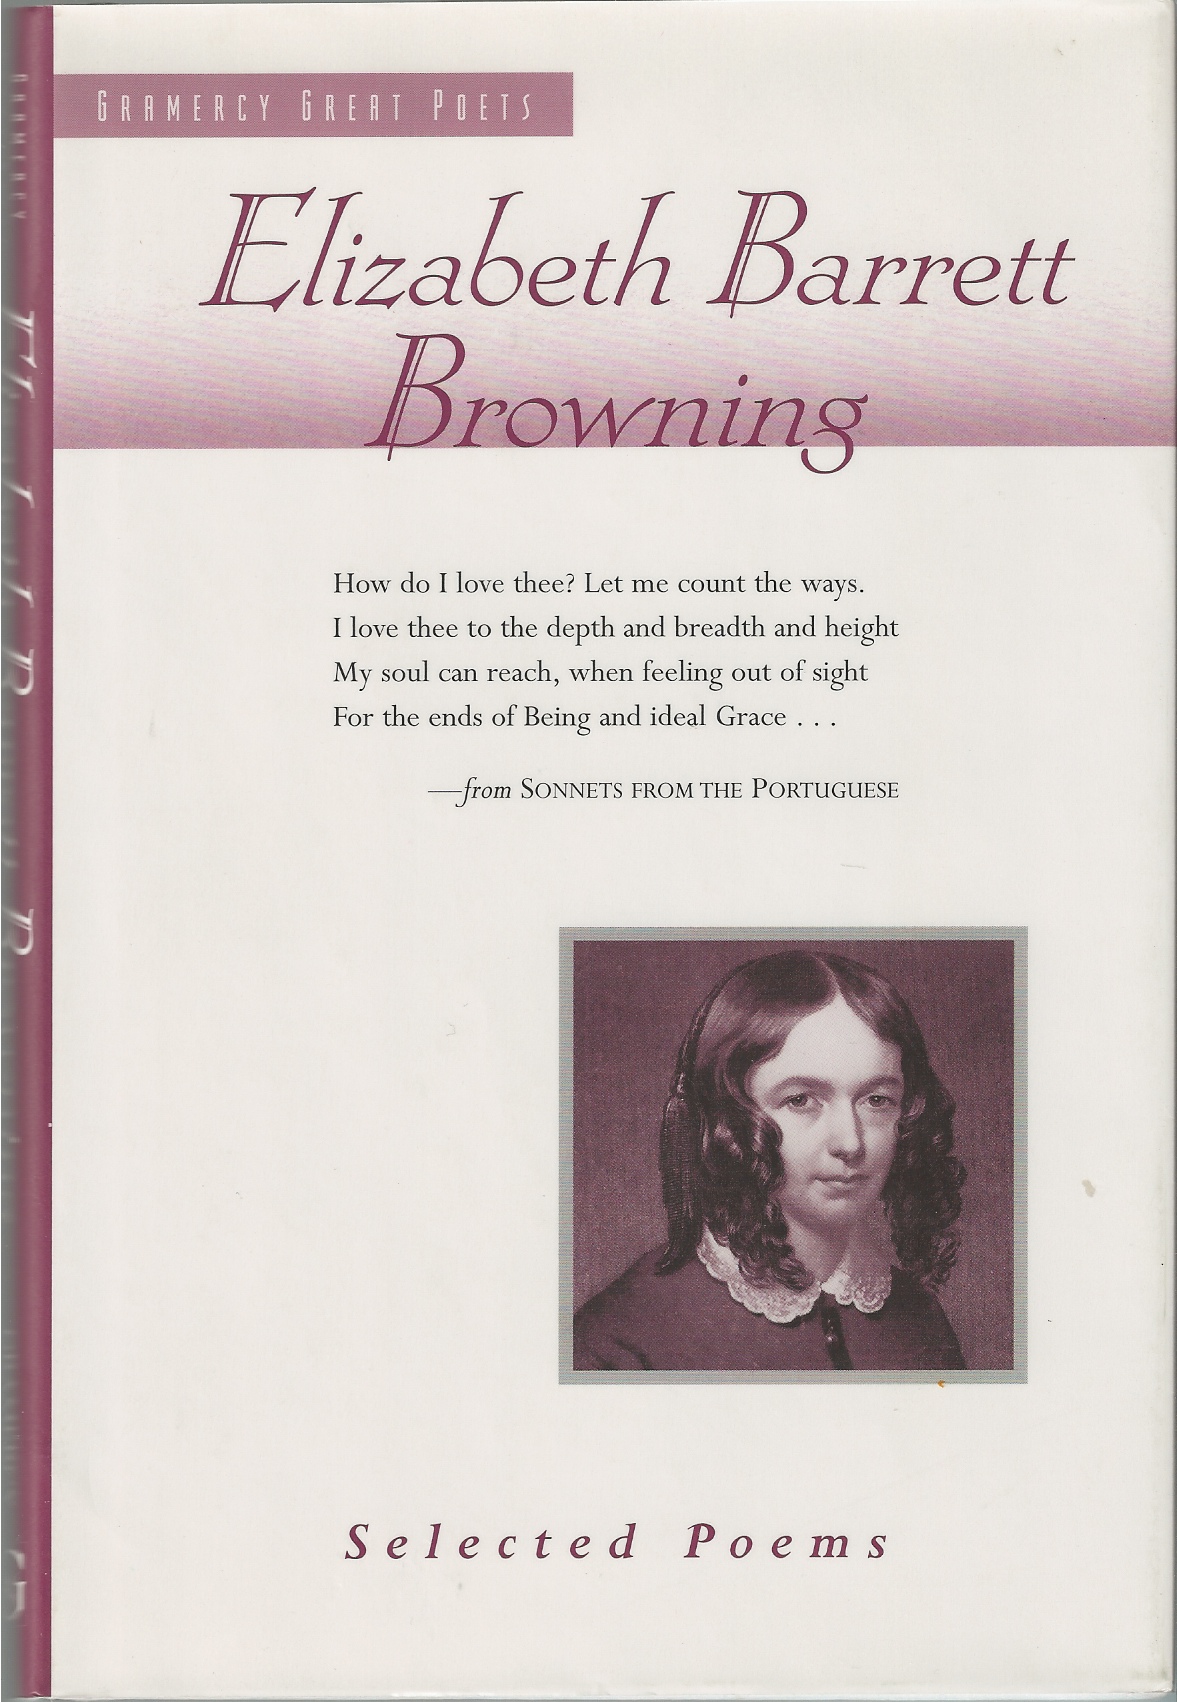 BROWNING ELIZABETH BARRETT - Selected Poems